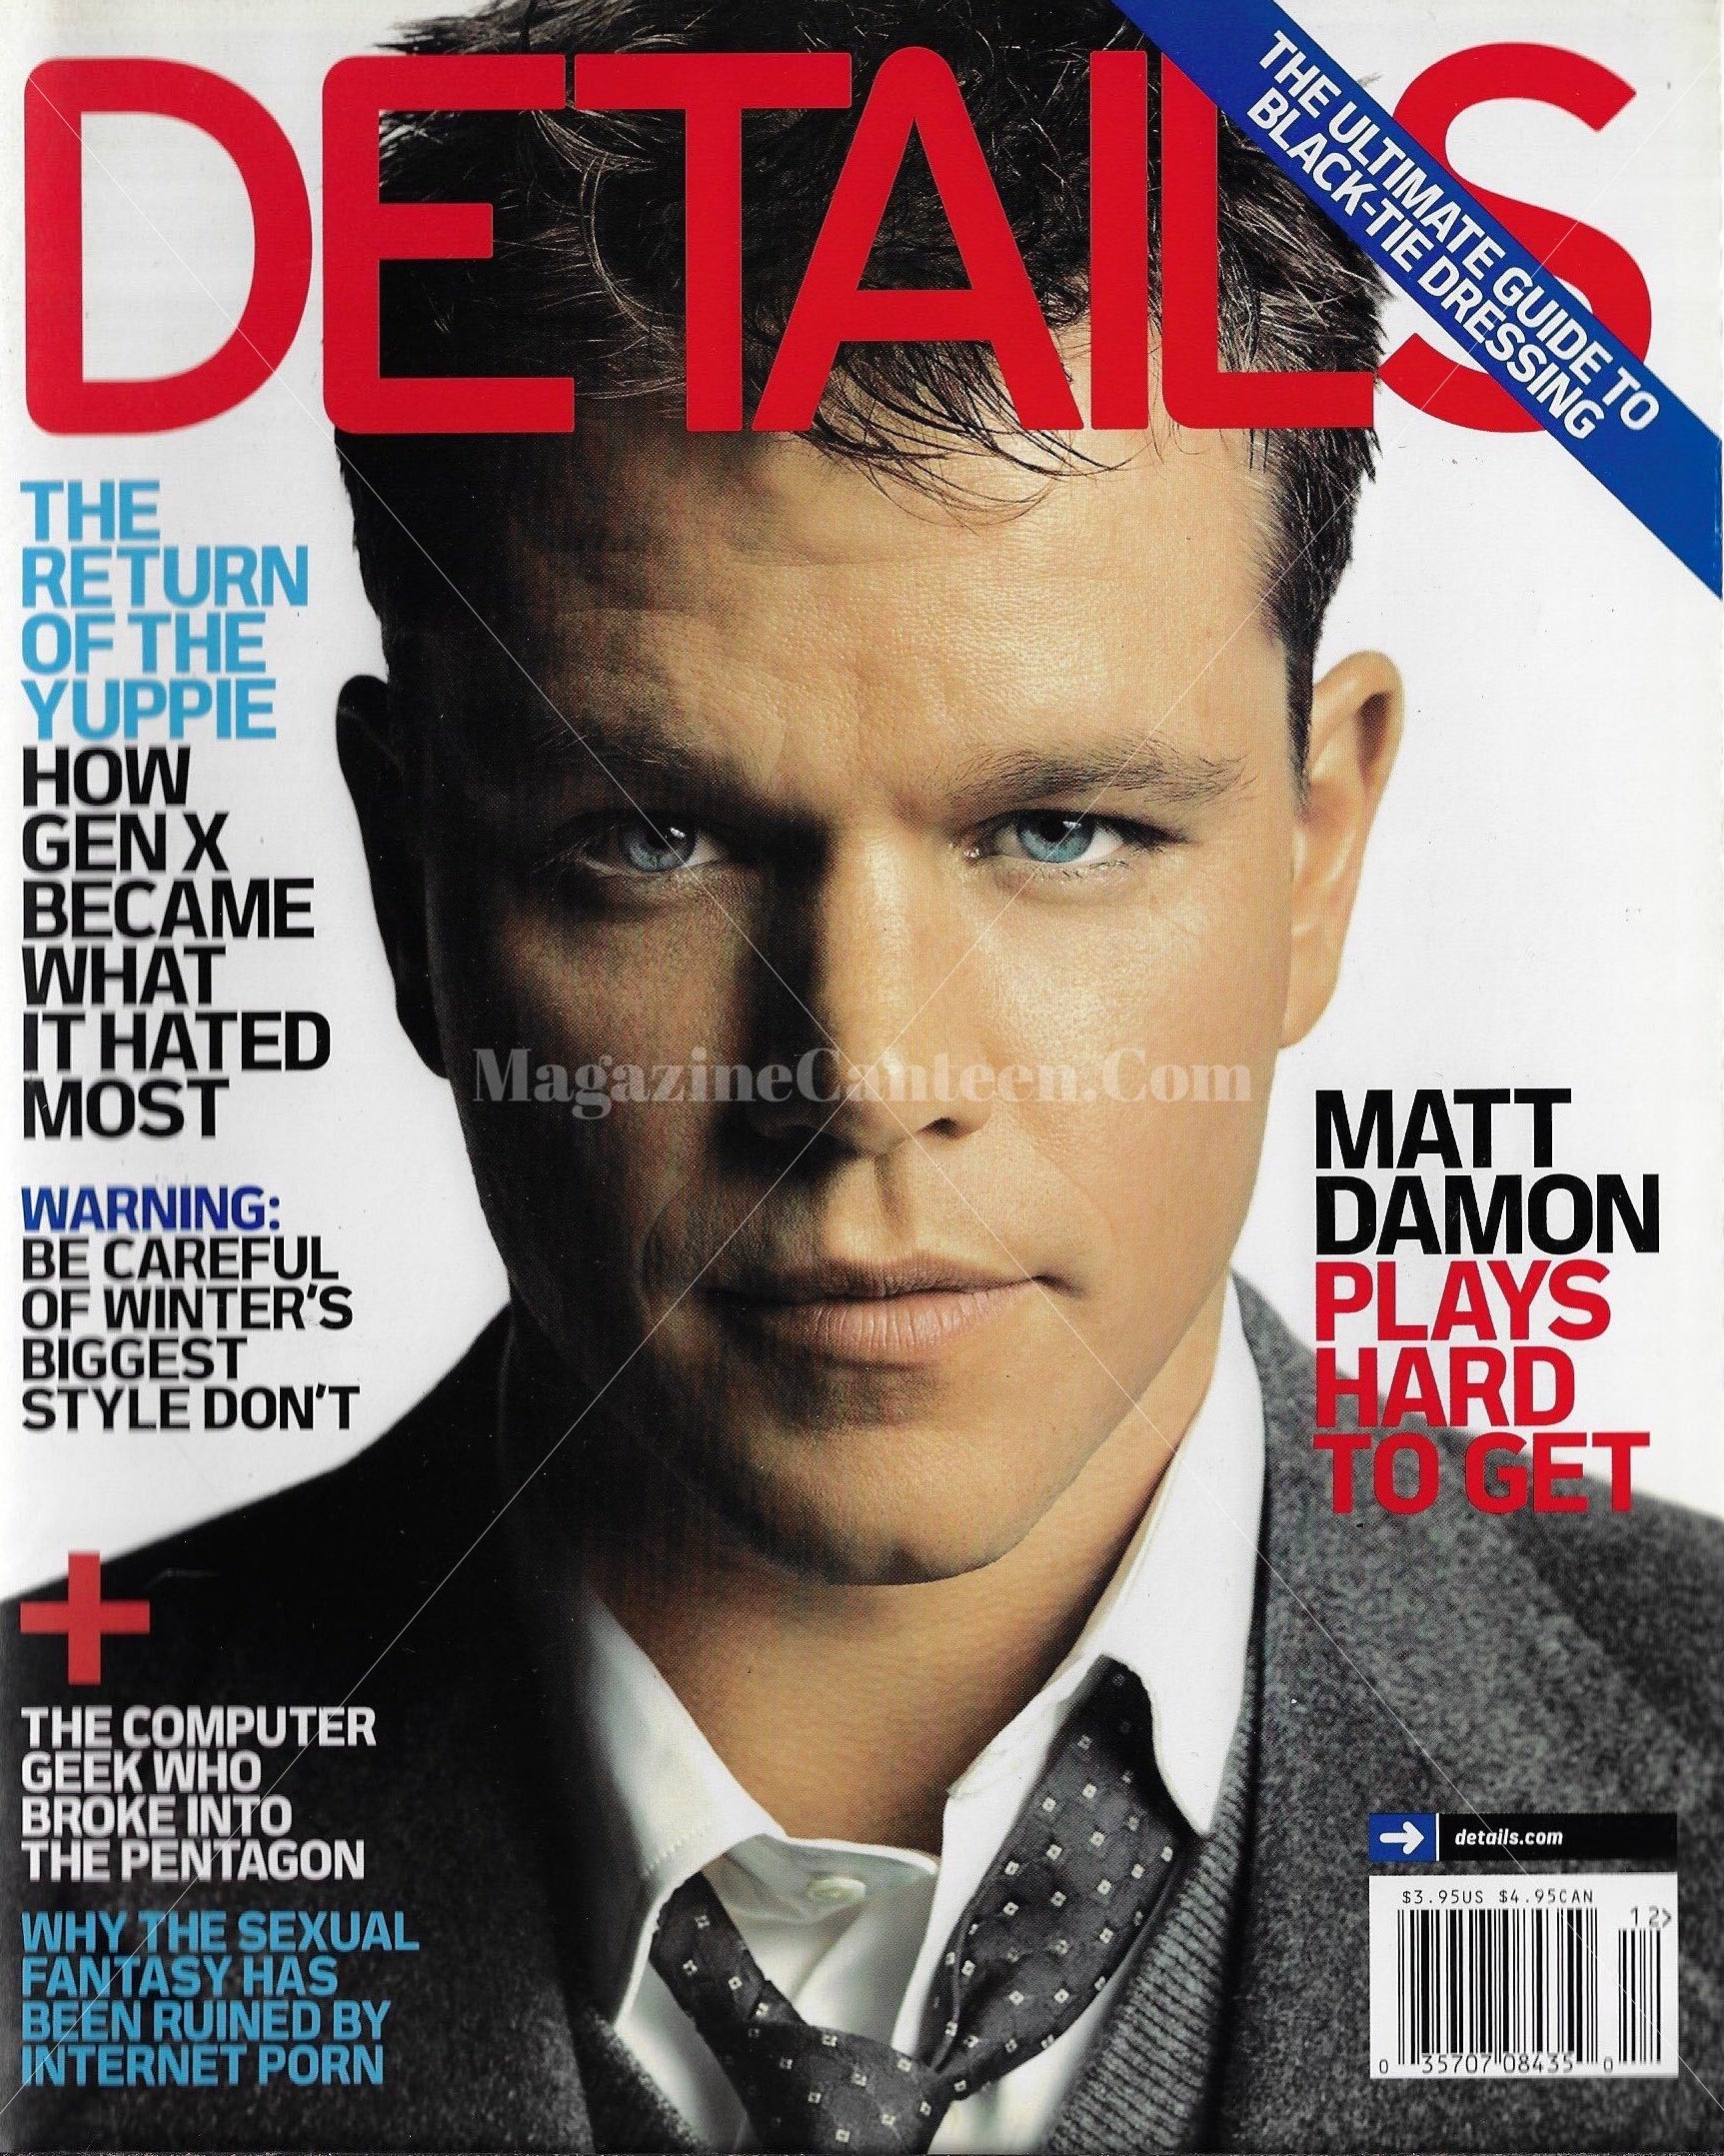 Details Magazine - Matt Damon